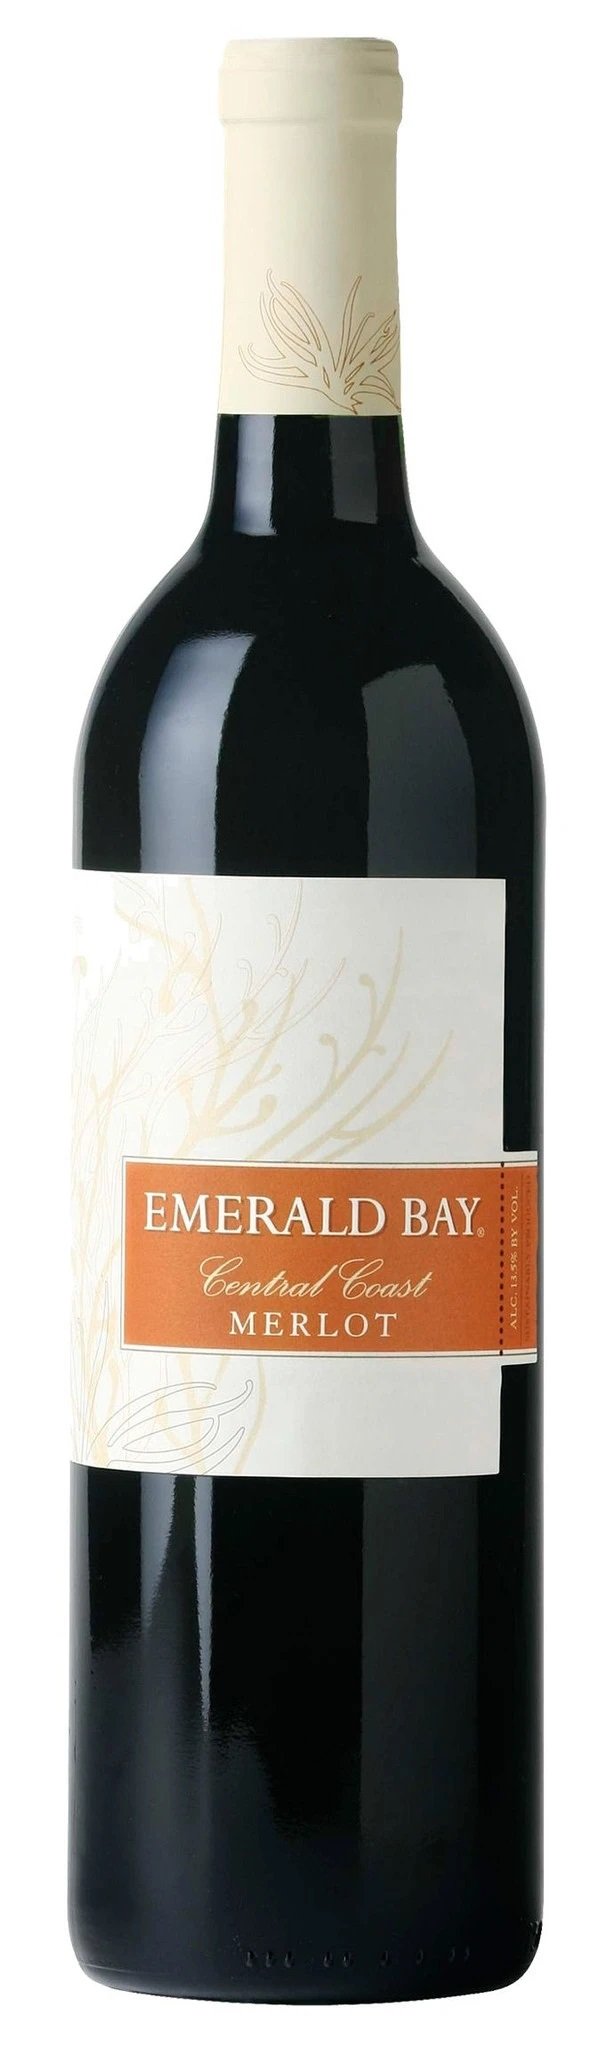 Emerald Bay Merlot 2013